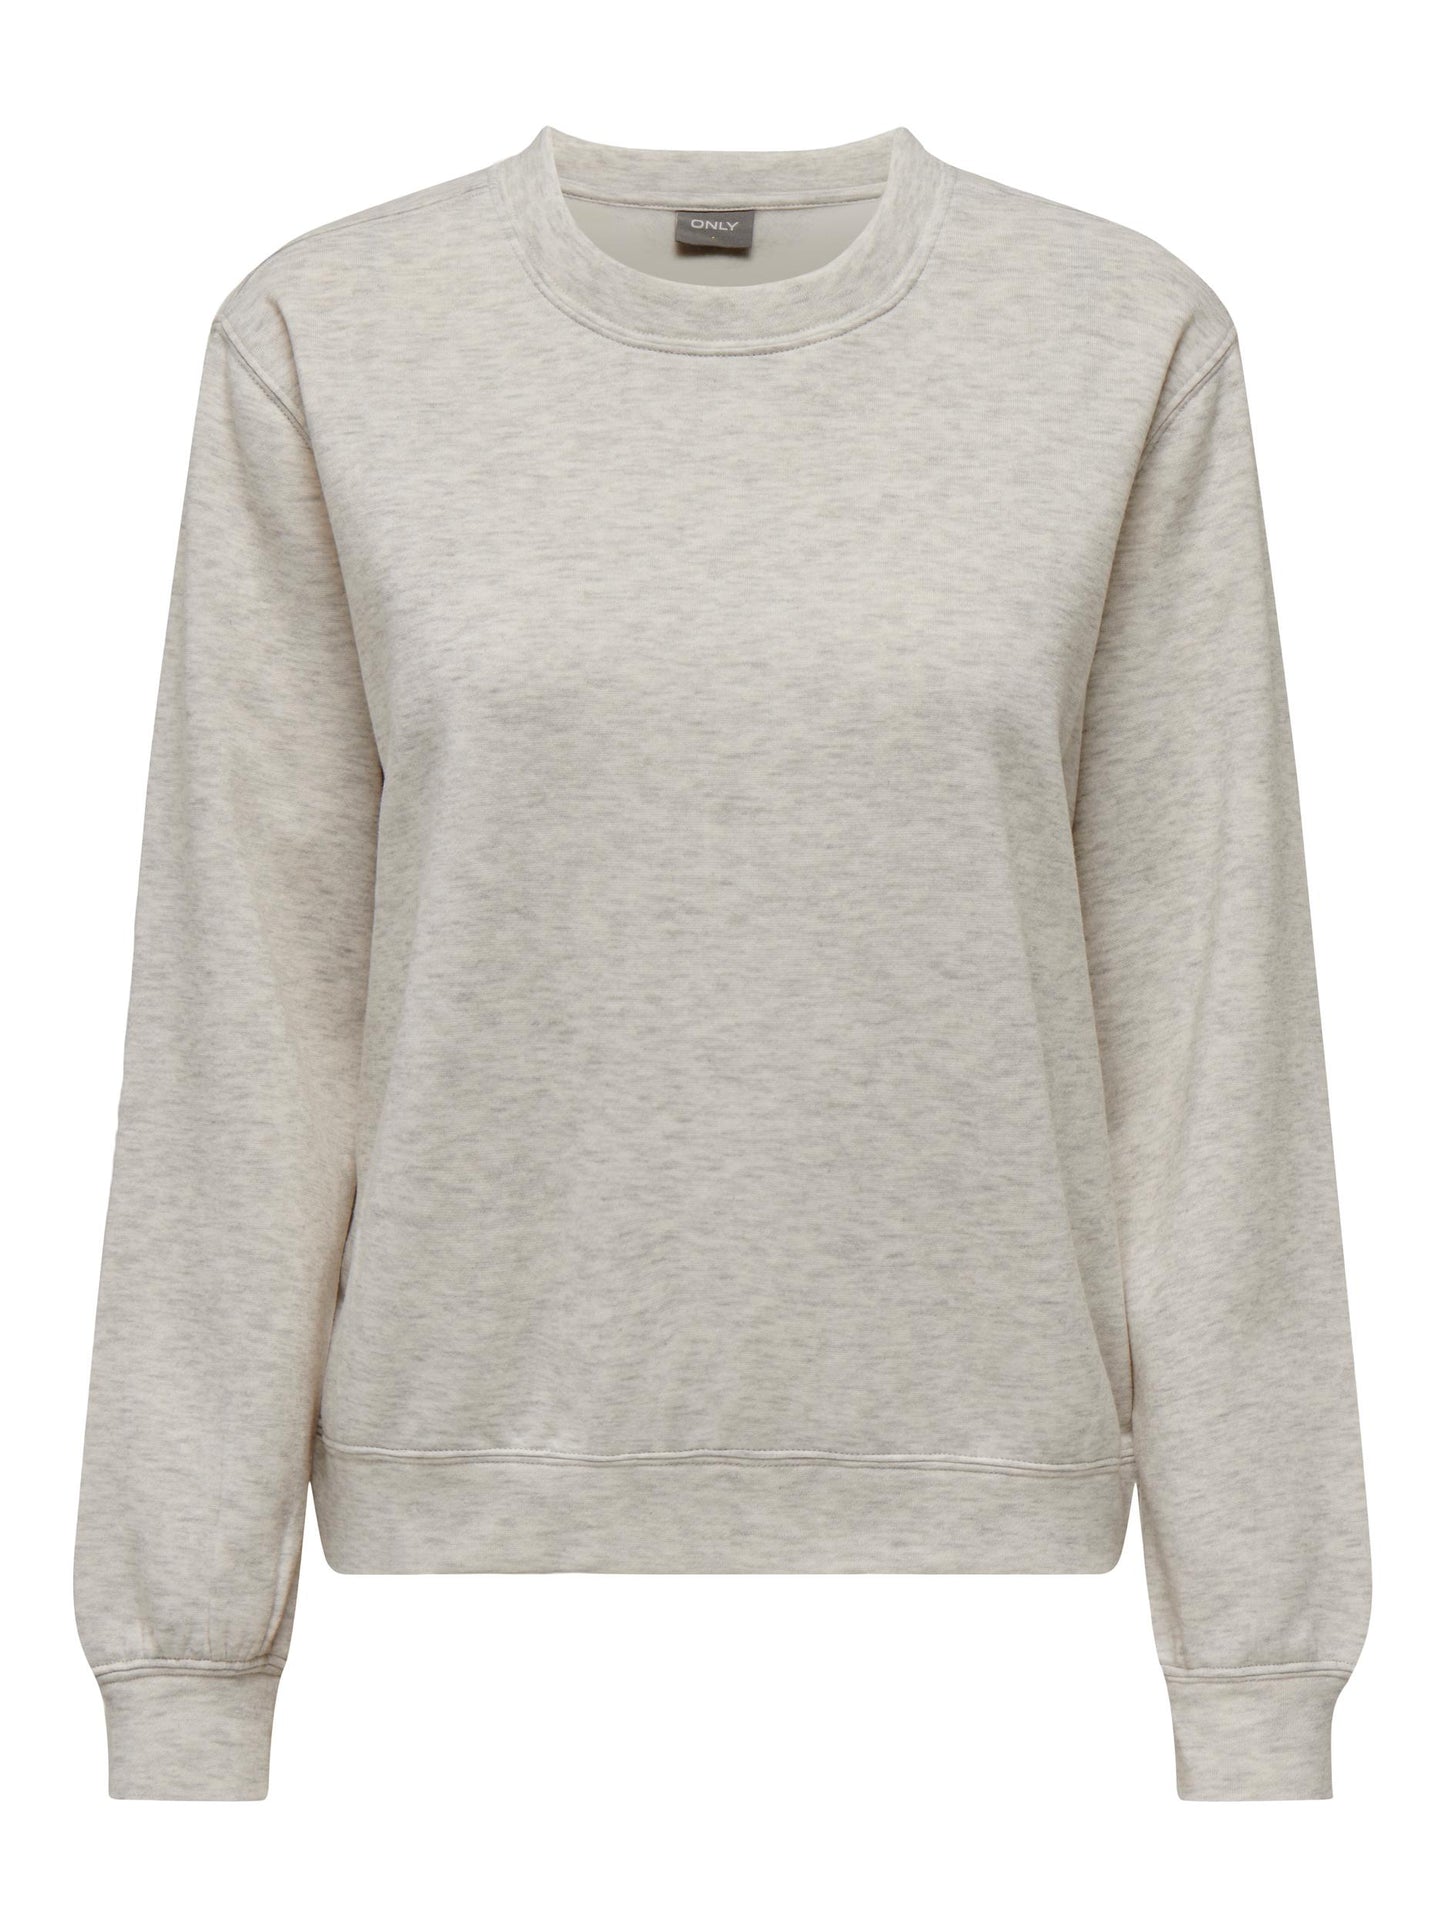 Diana Sweatshirt - Light Grey